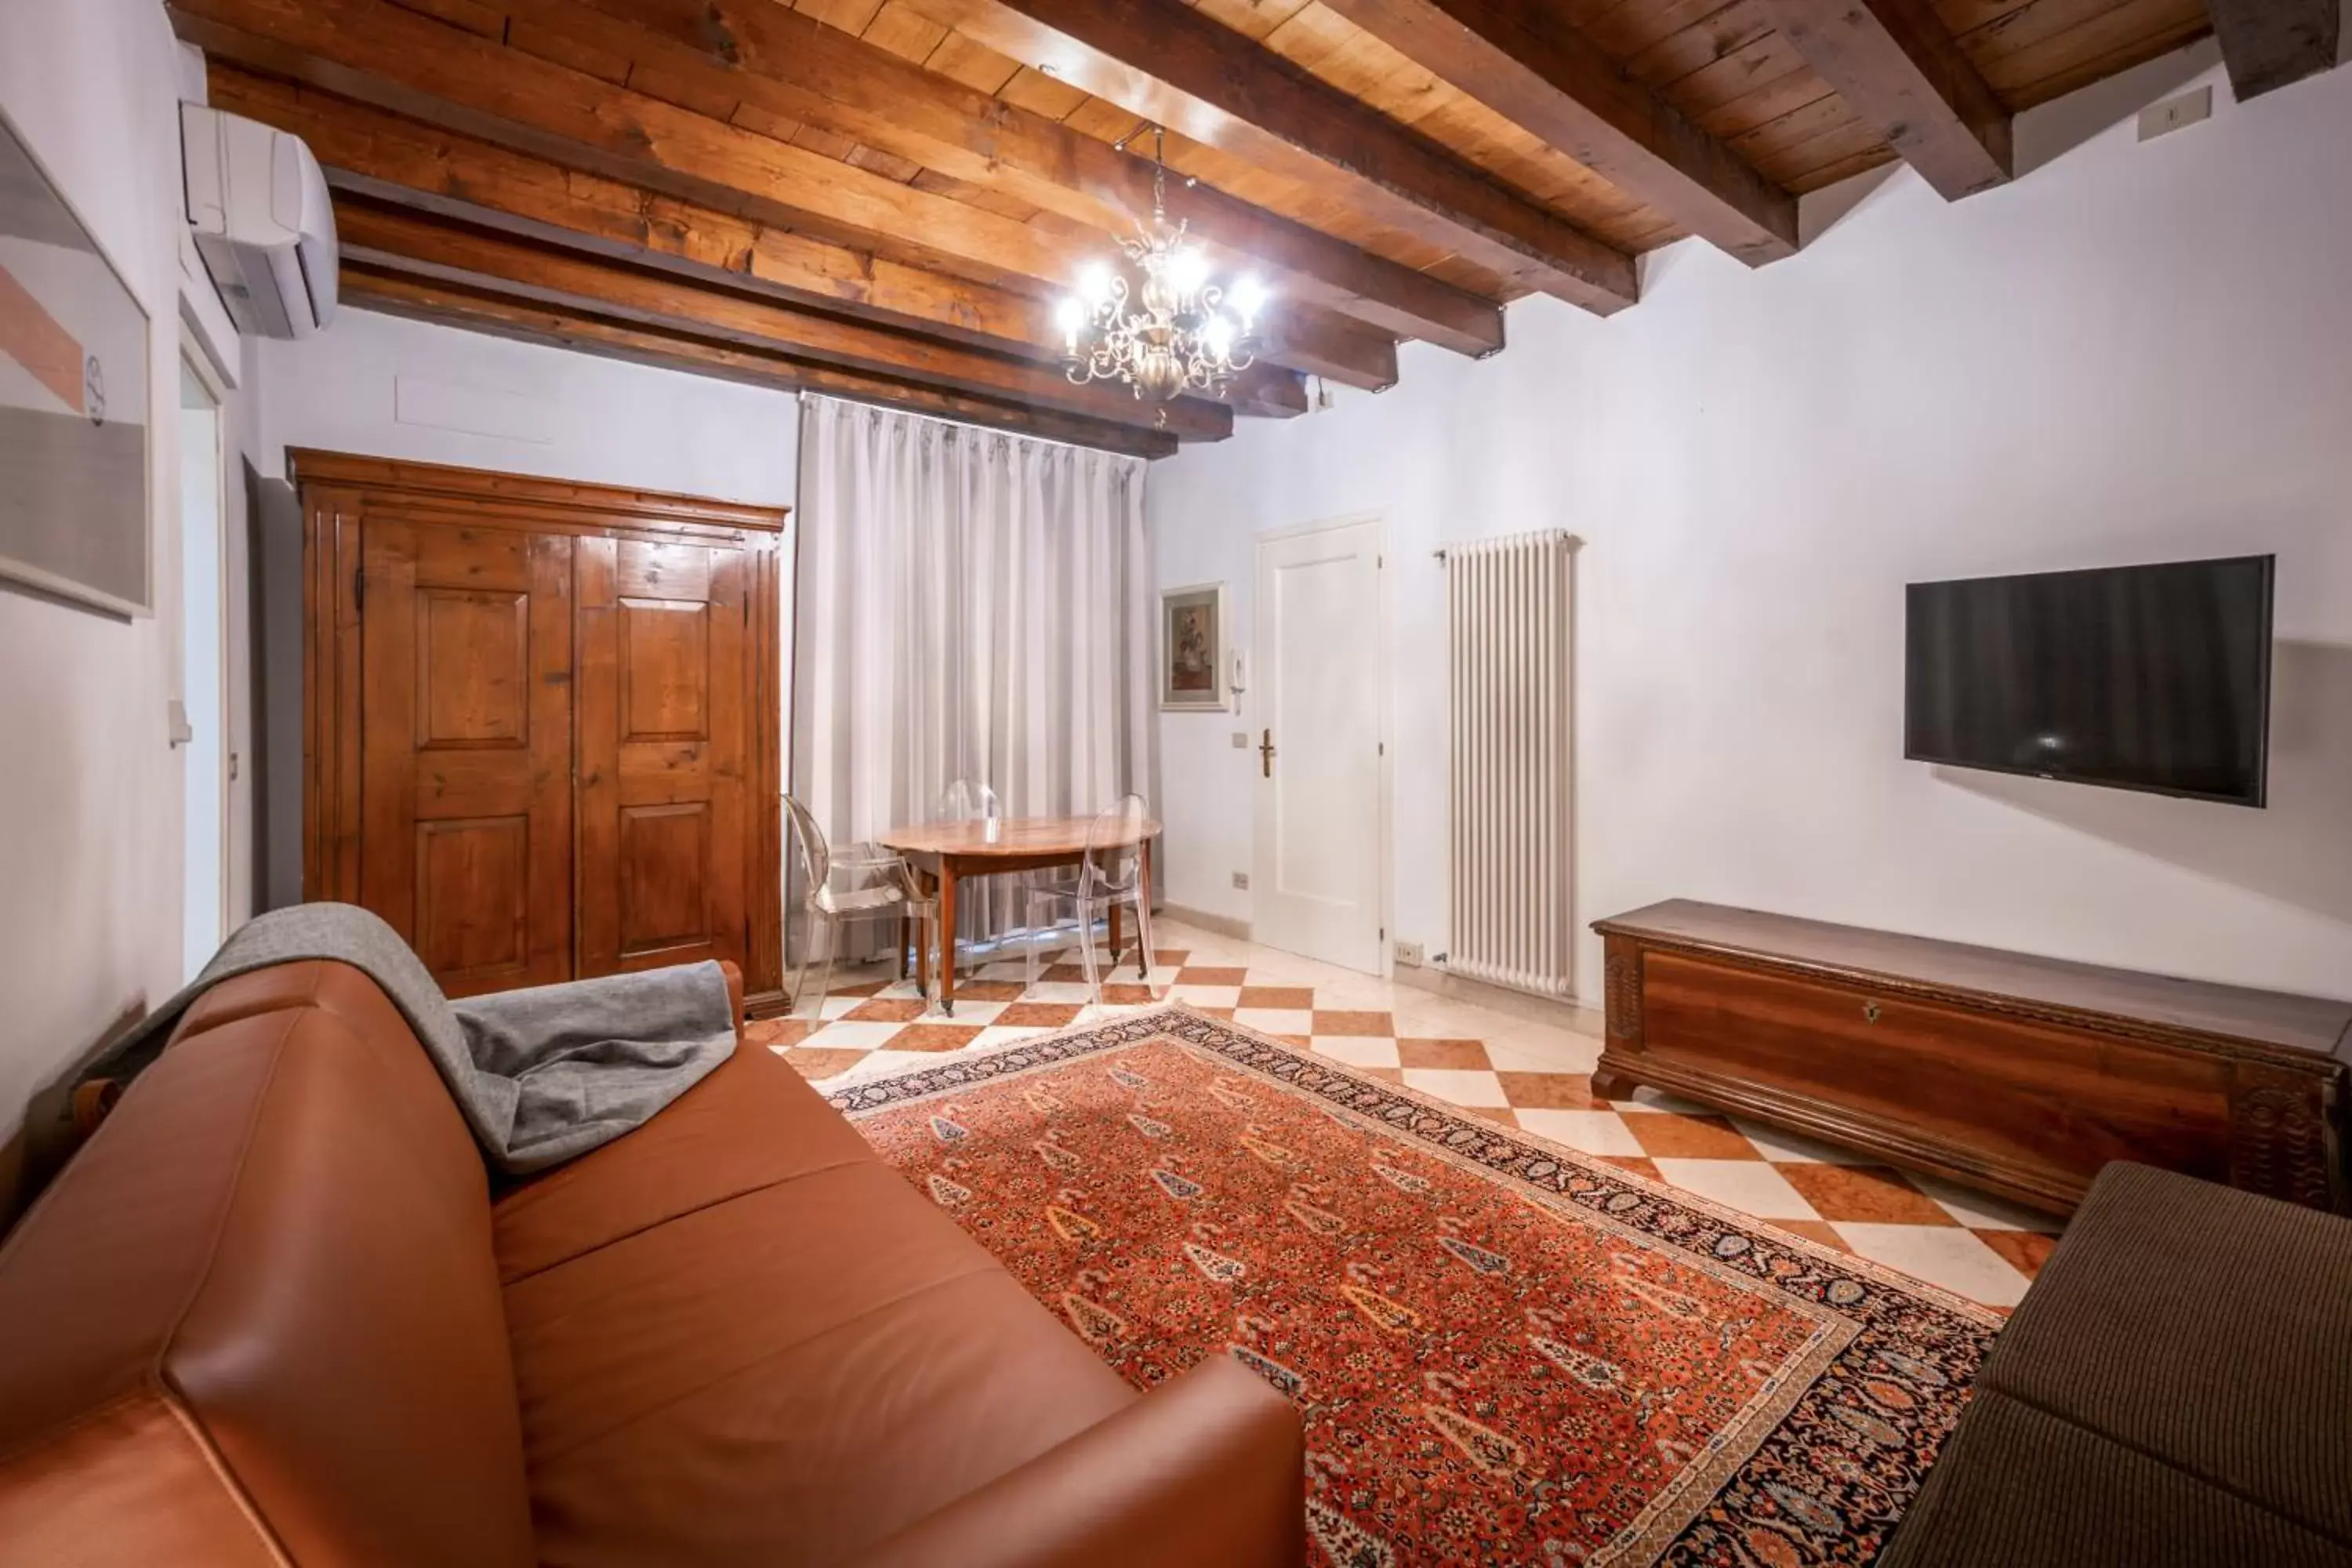 Apartment - Ground Floor - Sanpolo area in Palazzo San Luca